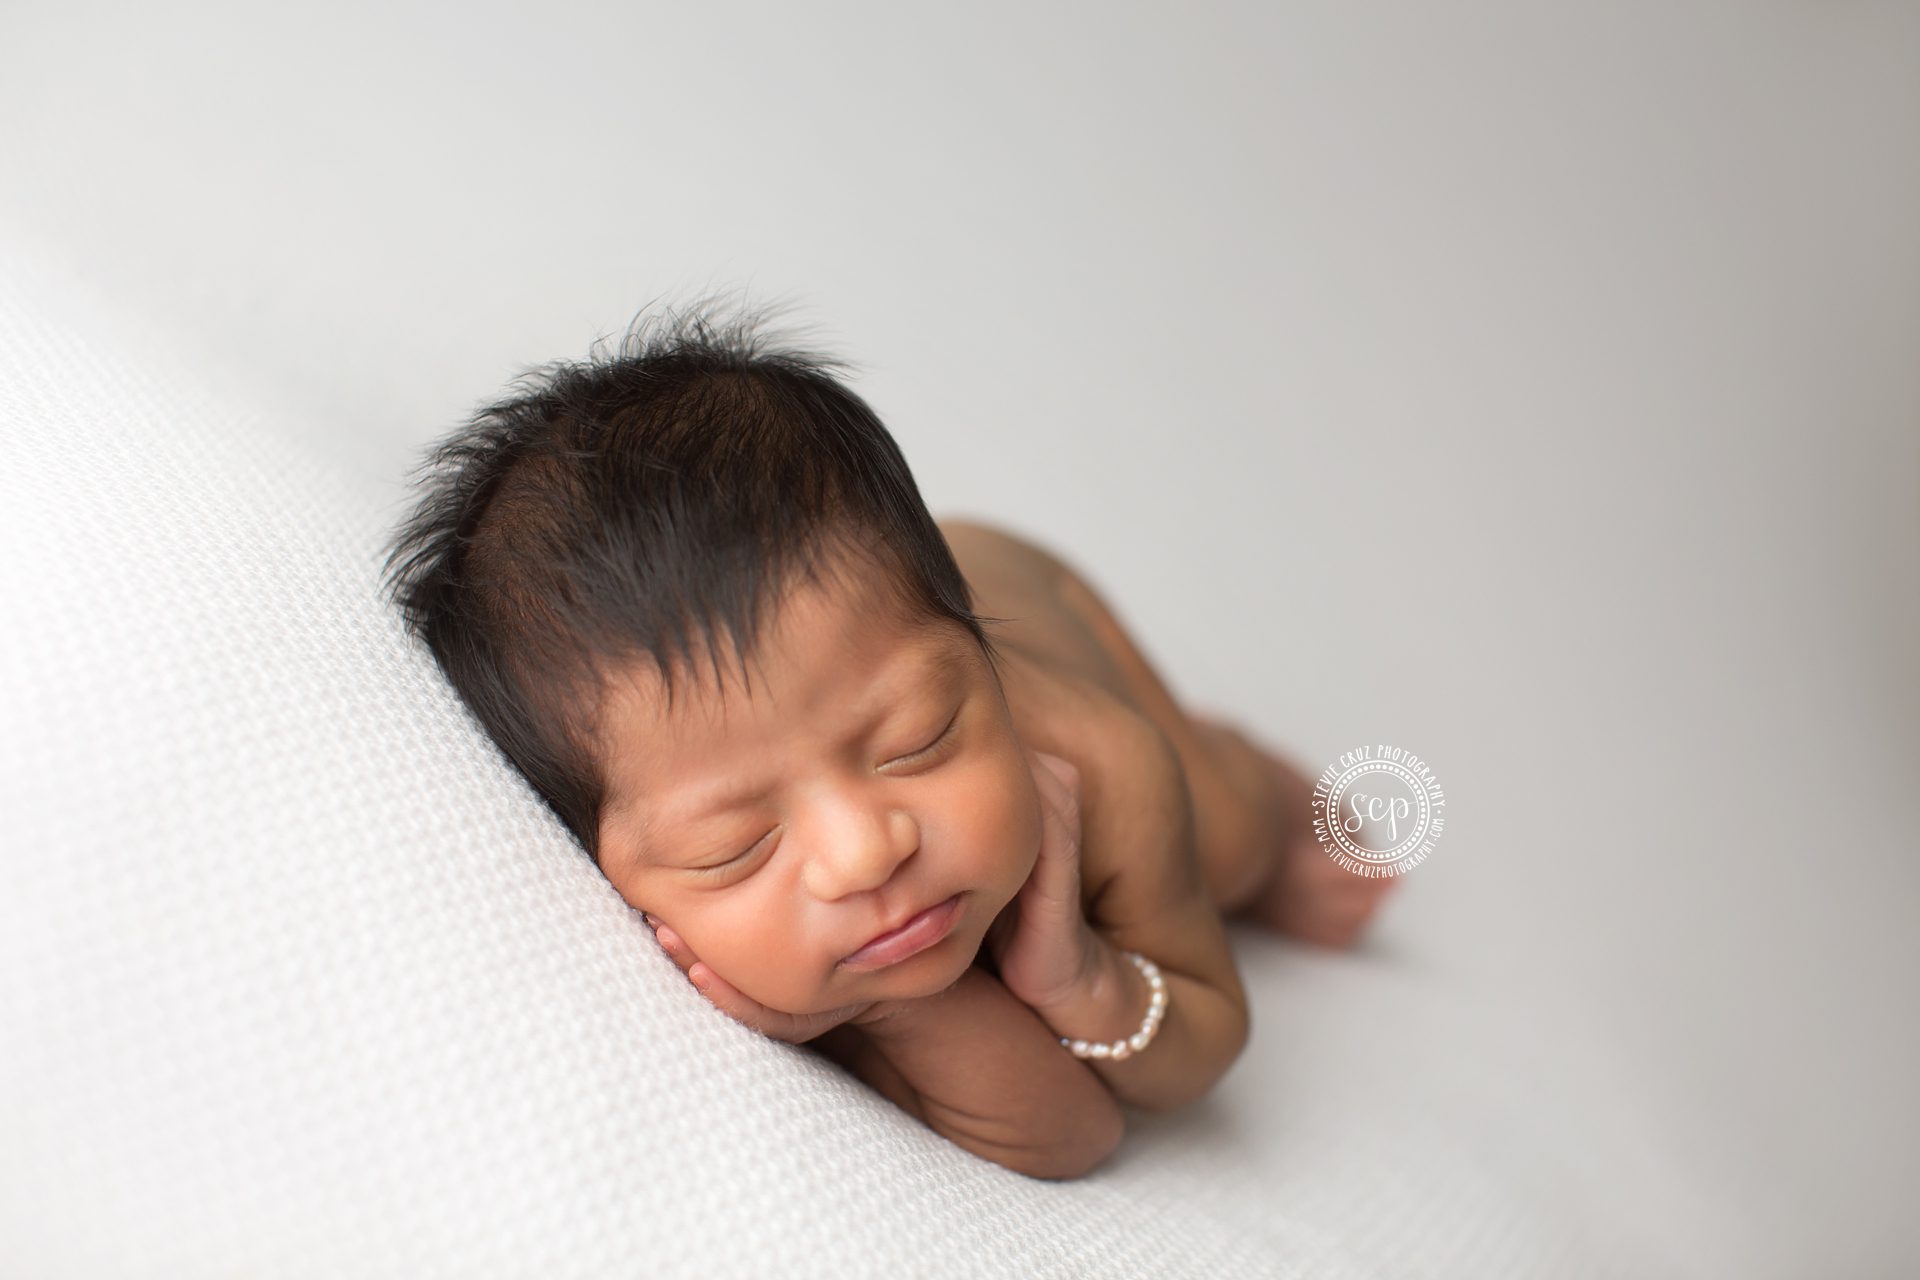  Best Orange County Newborn photographer captures precious baby girl. Love her pearl bracelet so cute